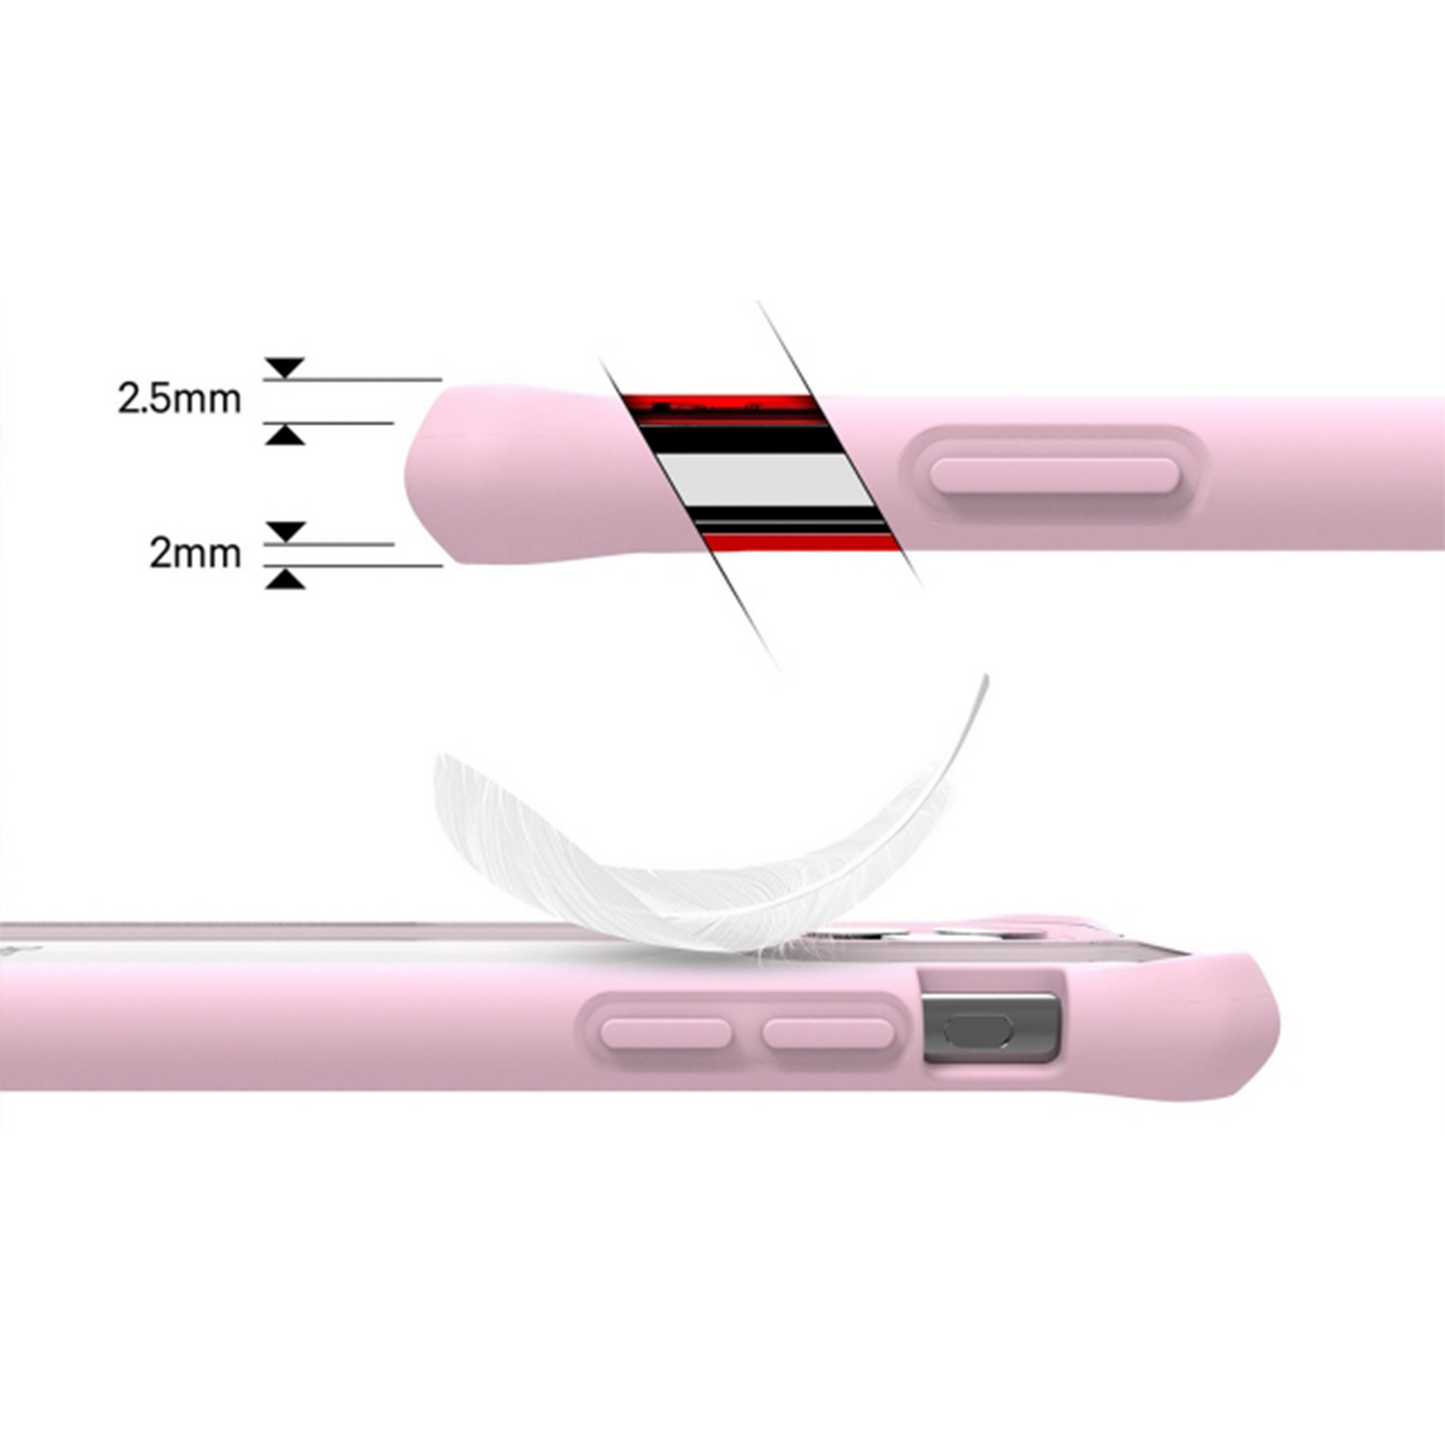 Refurbished ITSKINS HybridSolid Hoesje voor iPhone X/XS - Level 2 Bescherming - Transparant/Pink